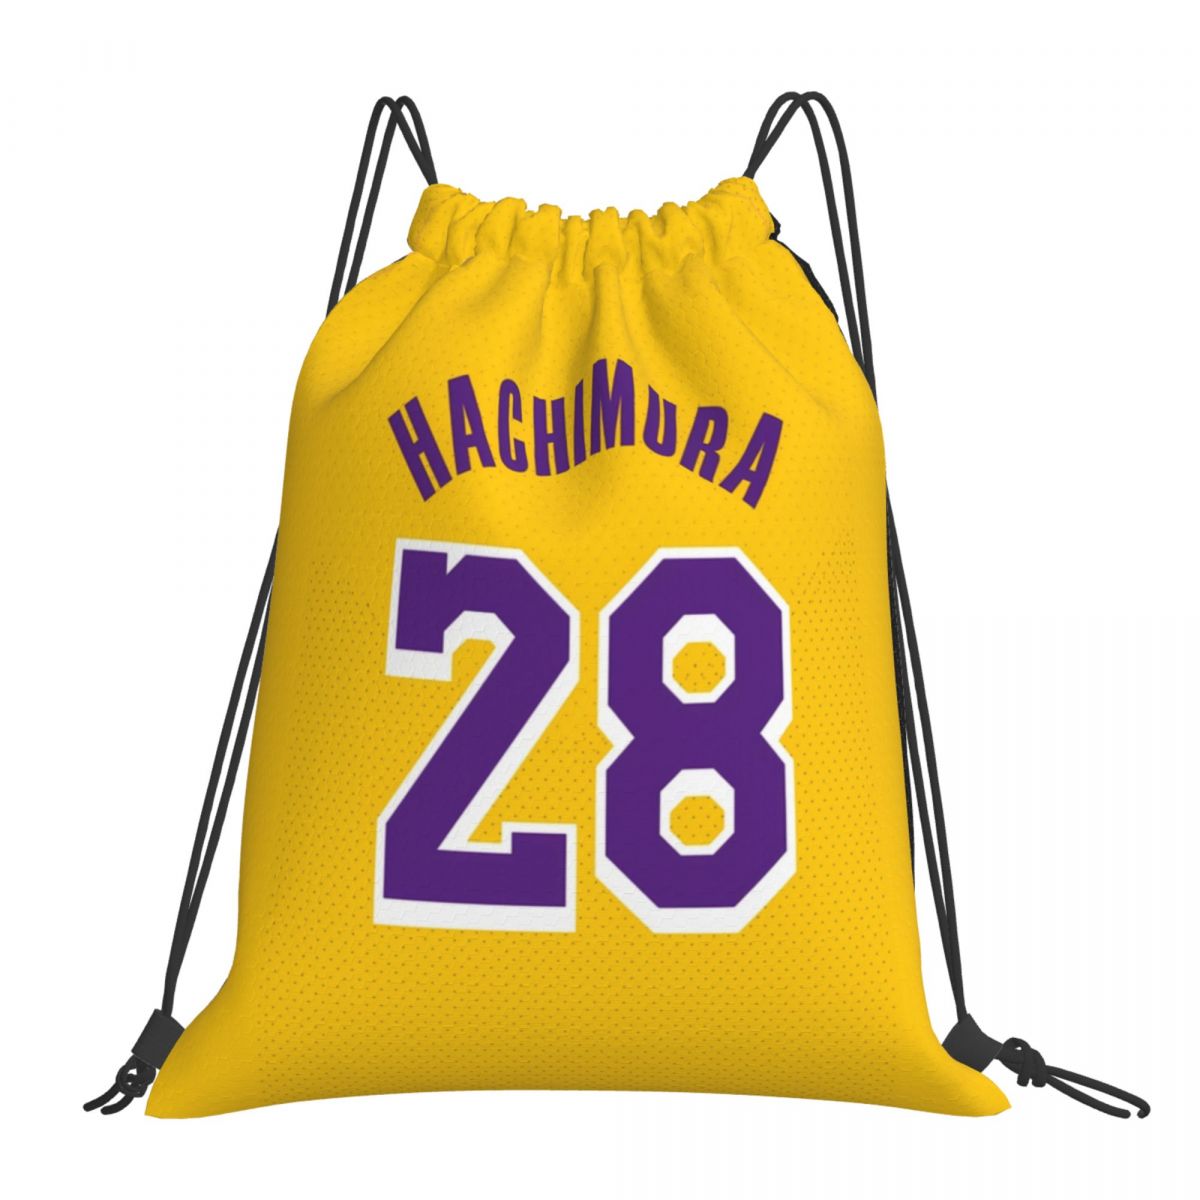 Los Angeles Lakers Rui Hachimura Unisex Drawstring Backpack Bag Travel Sackpack